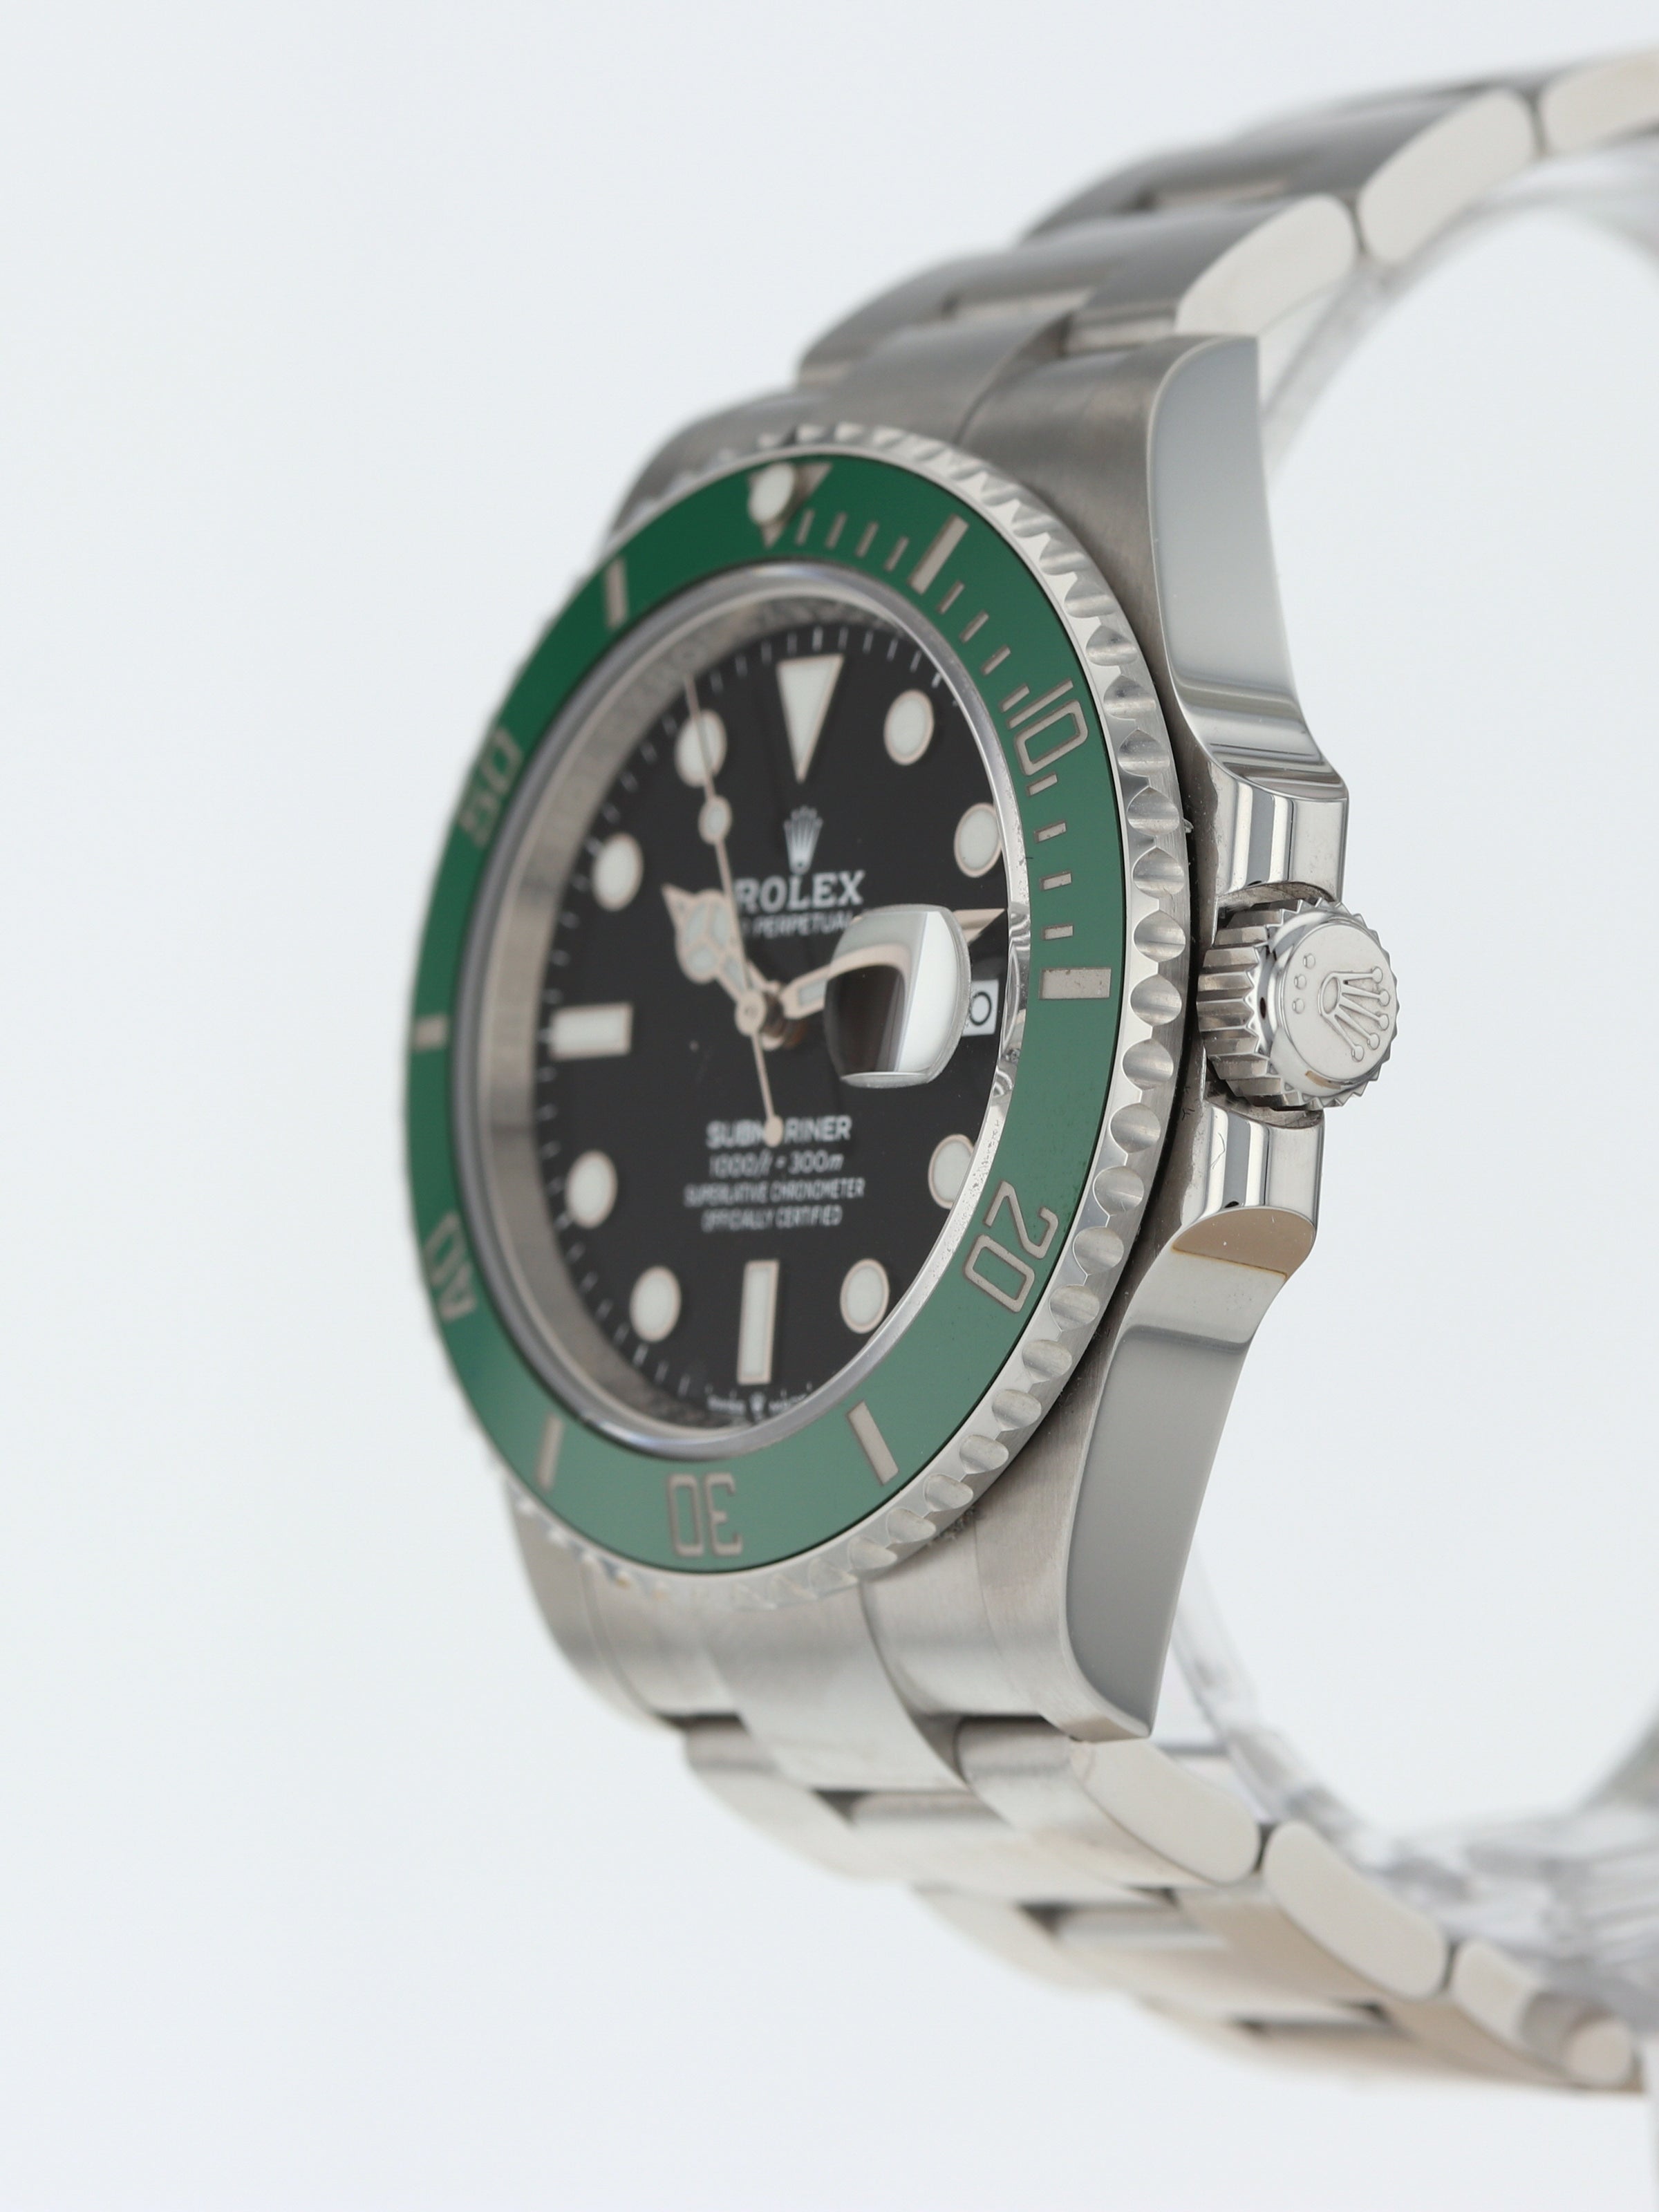 Rolex Submariner 41 Black Dial Kermit Green Bezel Automatic Chronometer Men's Watch 126610LV New Release 2020